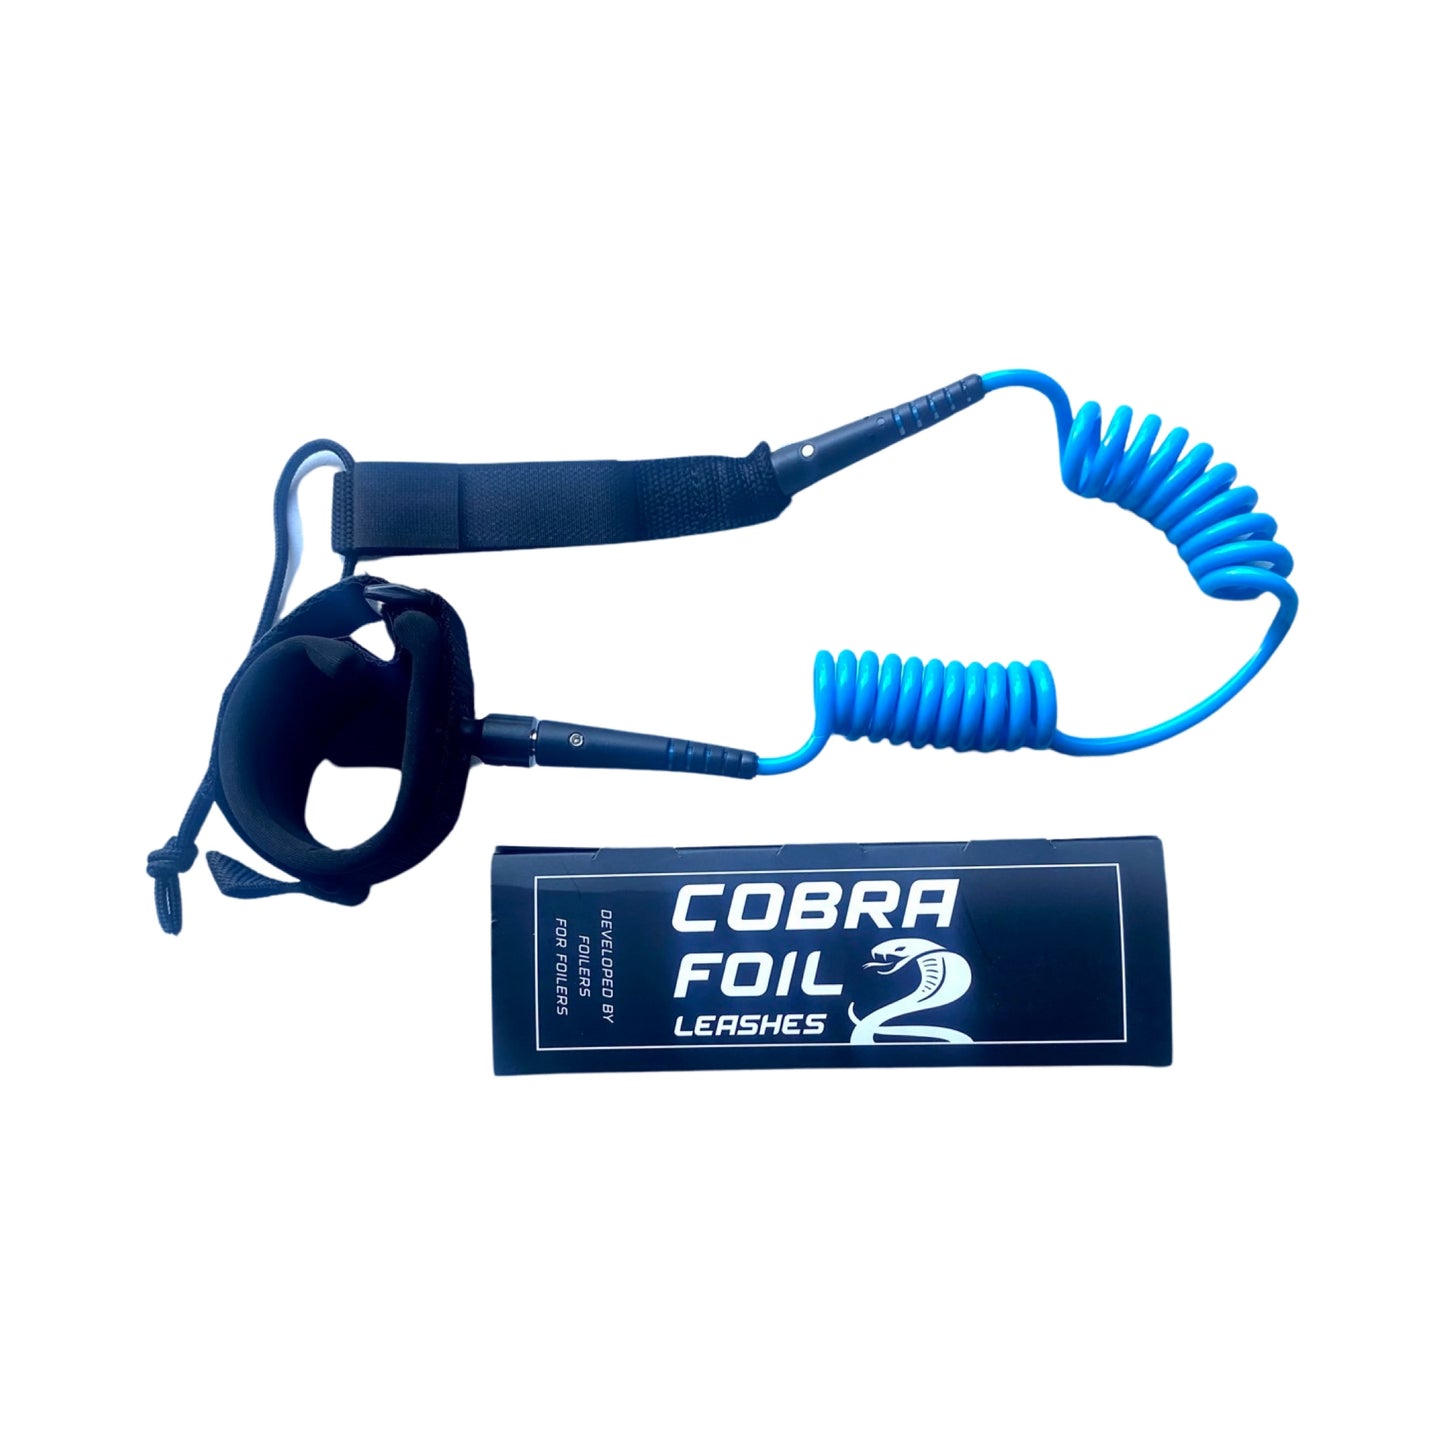 COBRA FOIL LEASH (WING LEASH) WRIST CUFF Double Coil 6ft 5.5mm for WINGS BLUE/BLACK